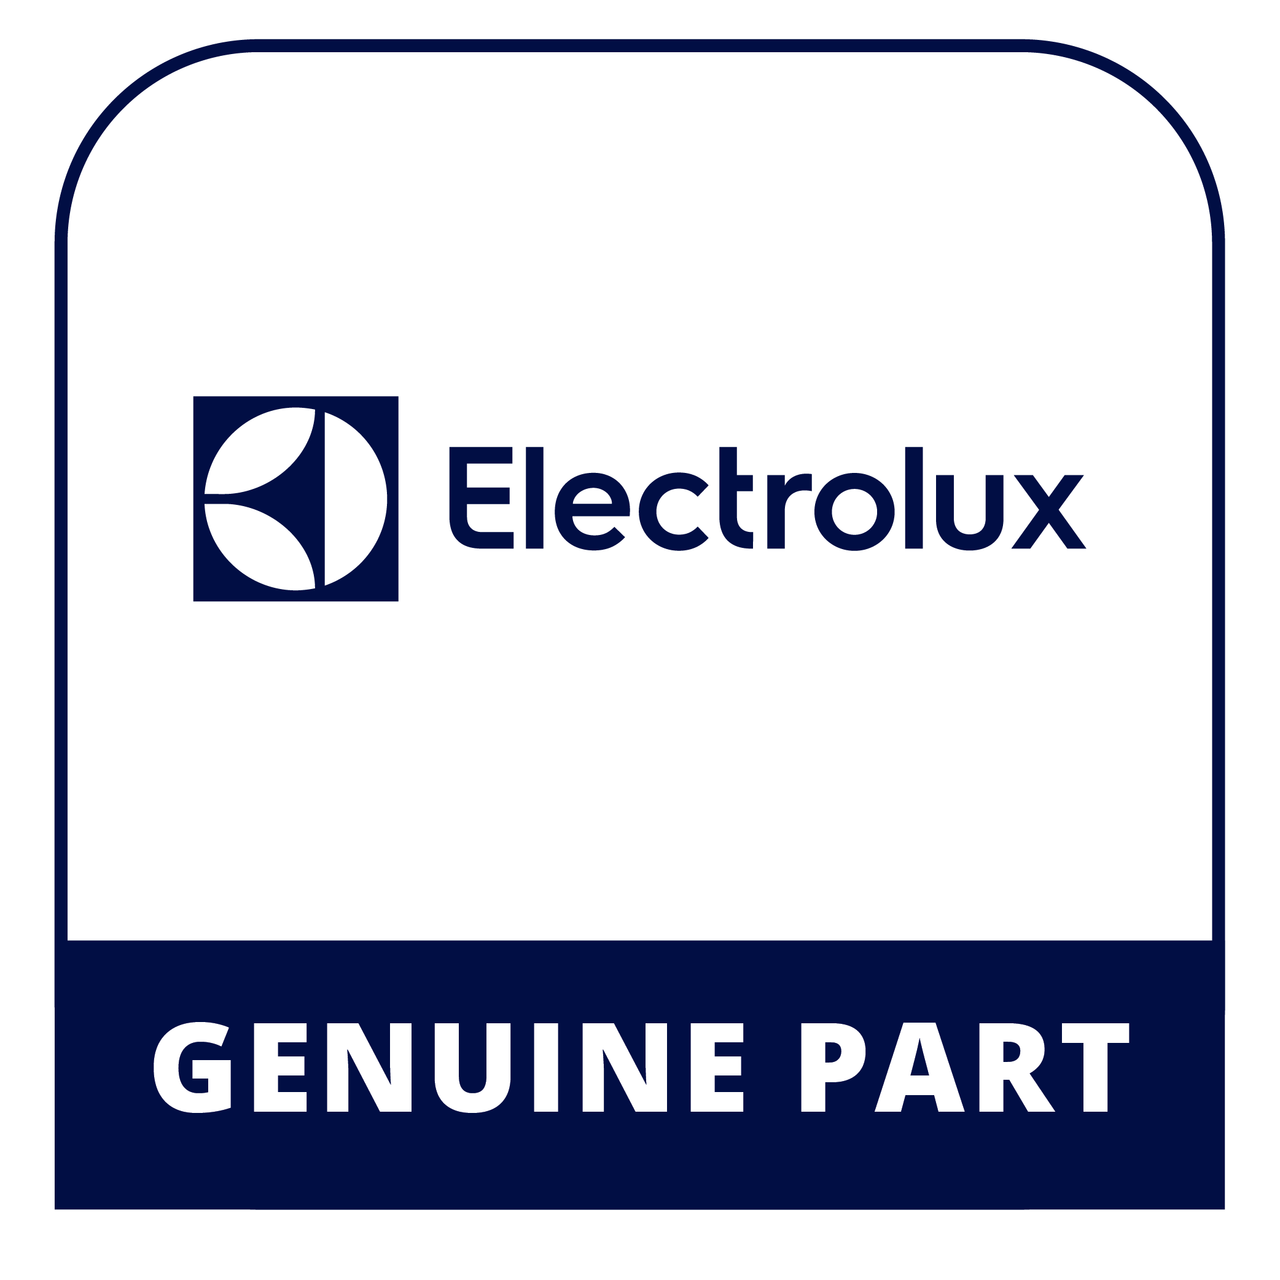 Frigidaire - Electrolux 318053120 - Seal - Genuine Electrolux Part